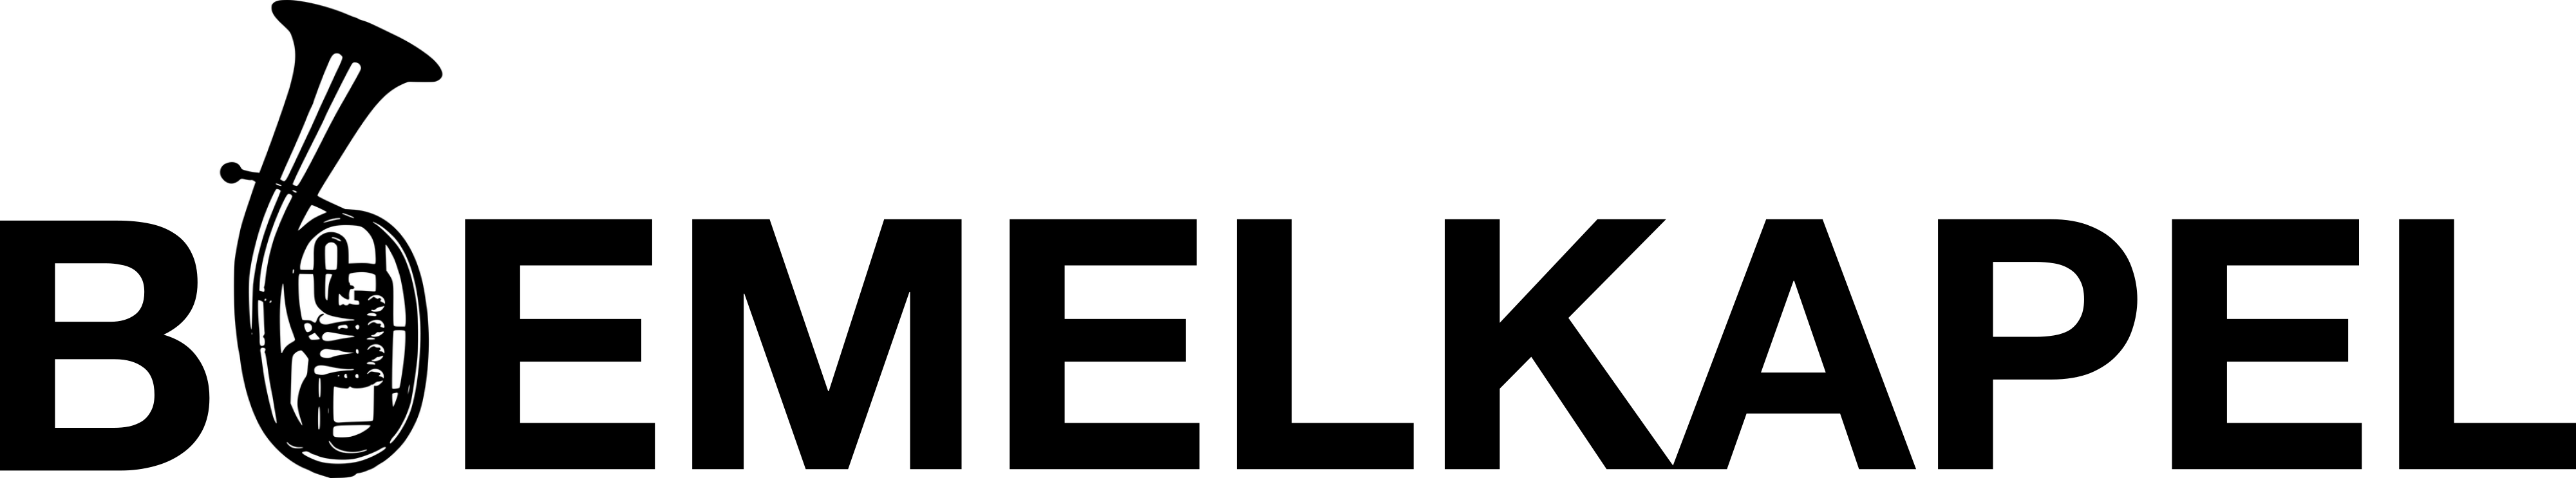 Logo Boemelkapel Banholt